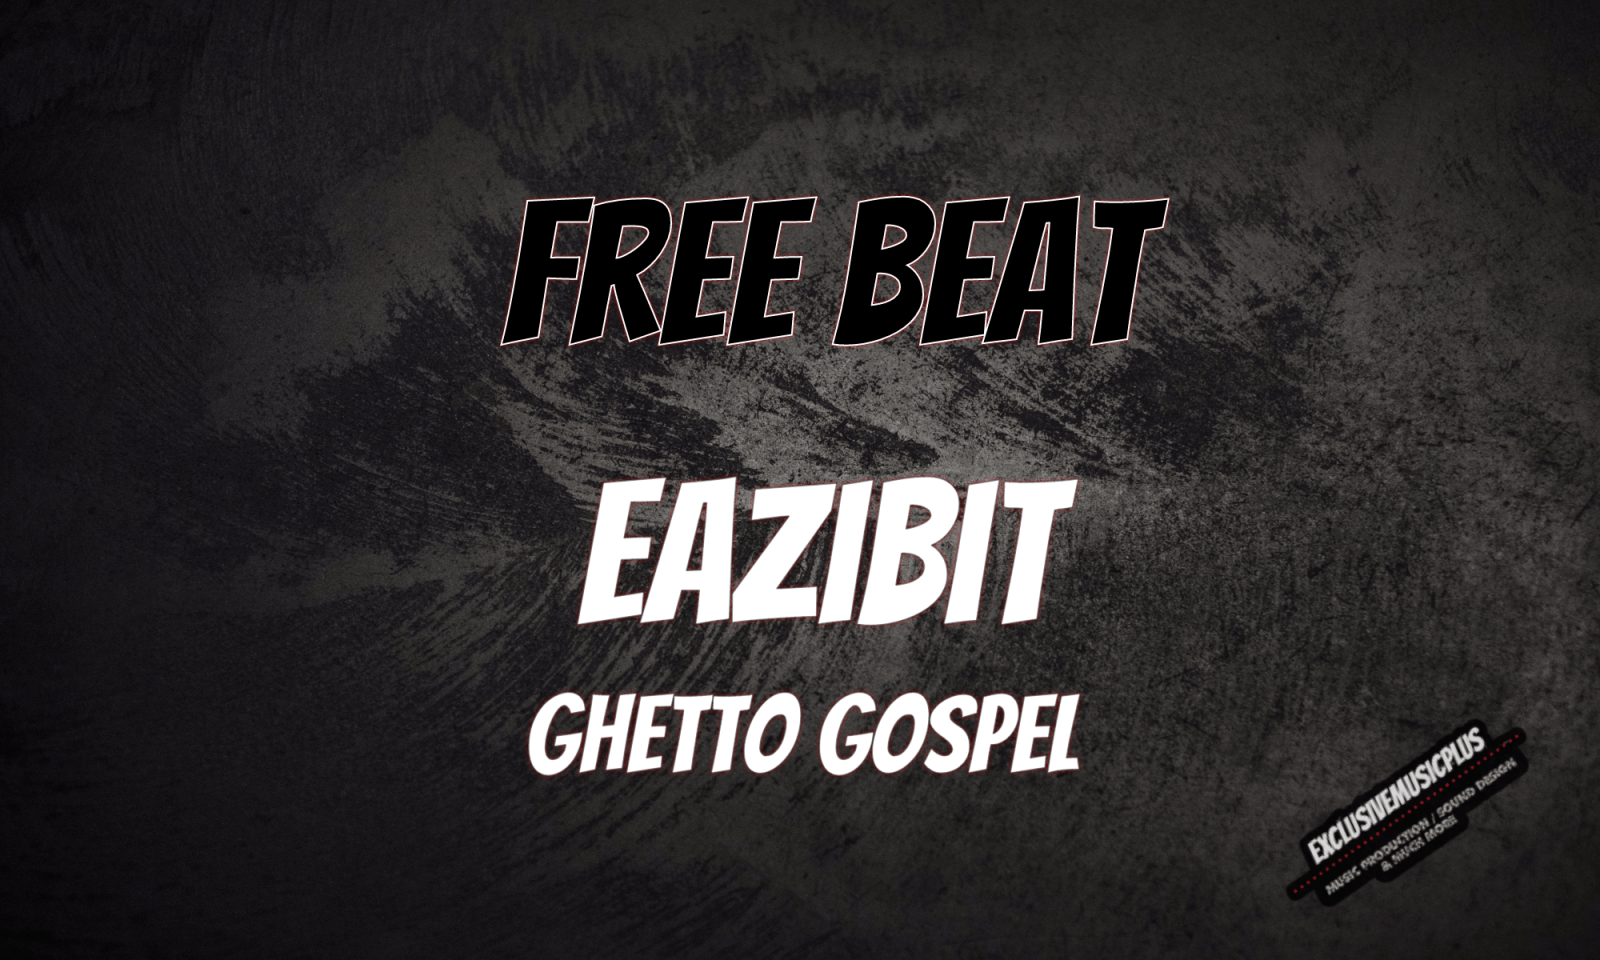 [Free Beat] Eazibit - Ghetto Gospel